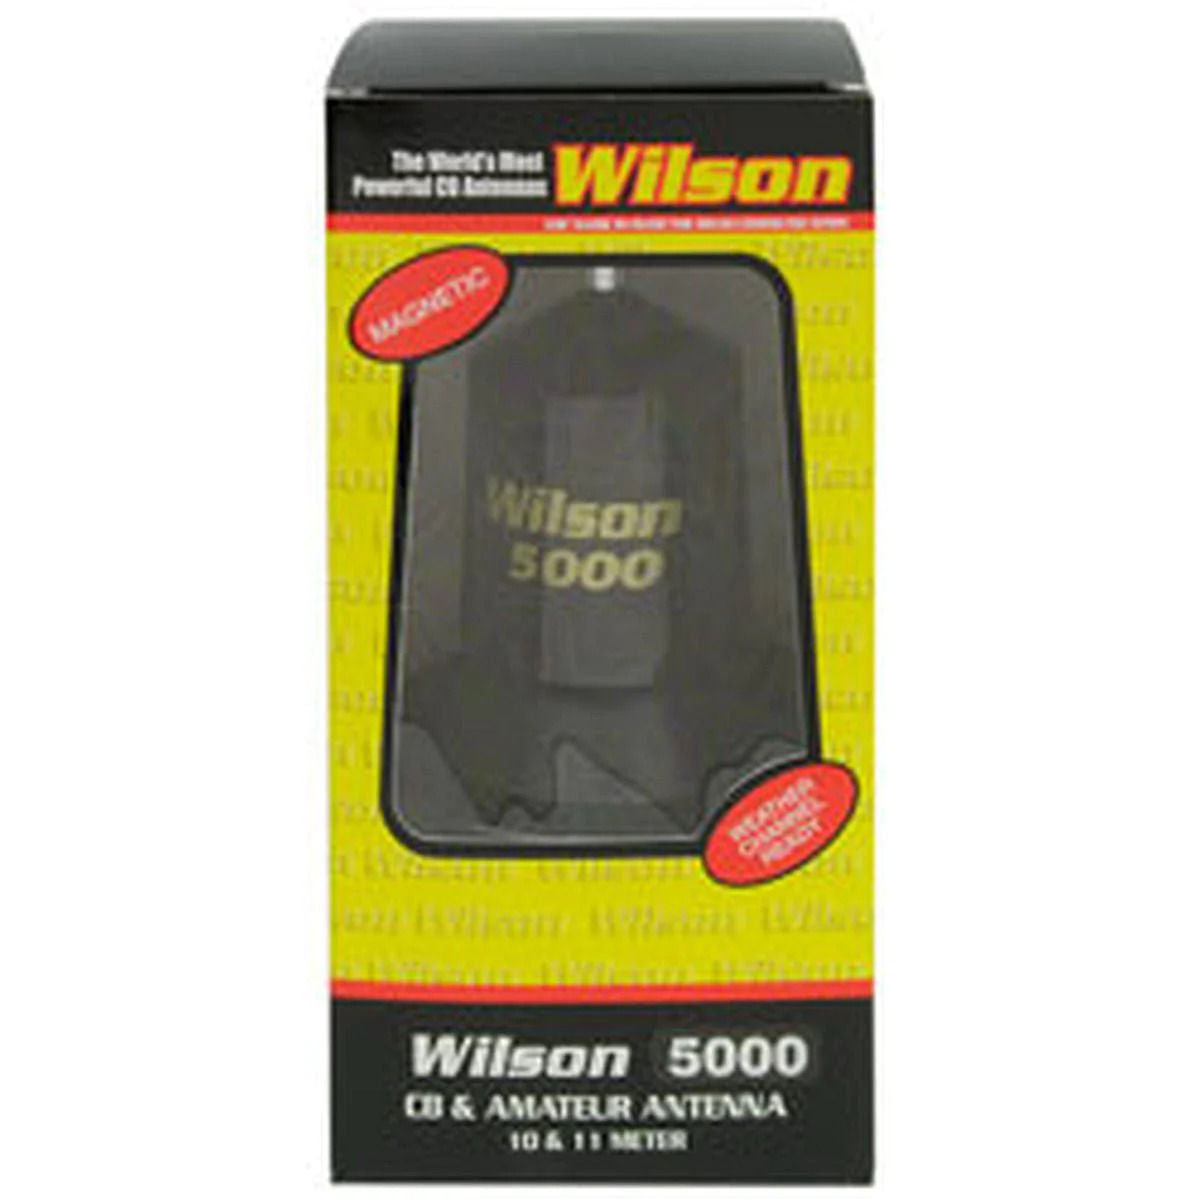 Wilson 880-200152B - 5000 W CB Radio Magnet Mount Antenna